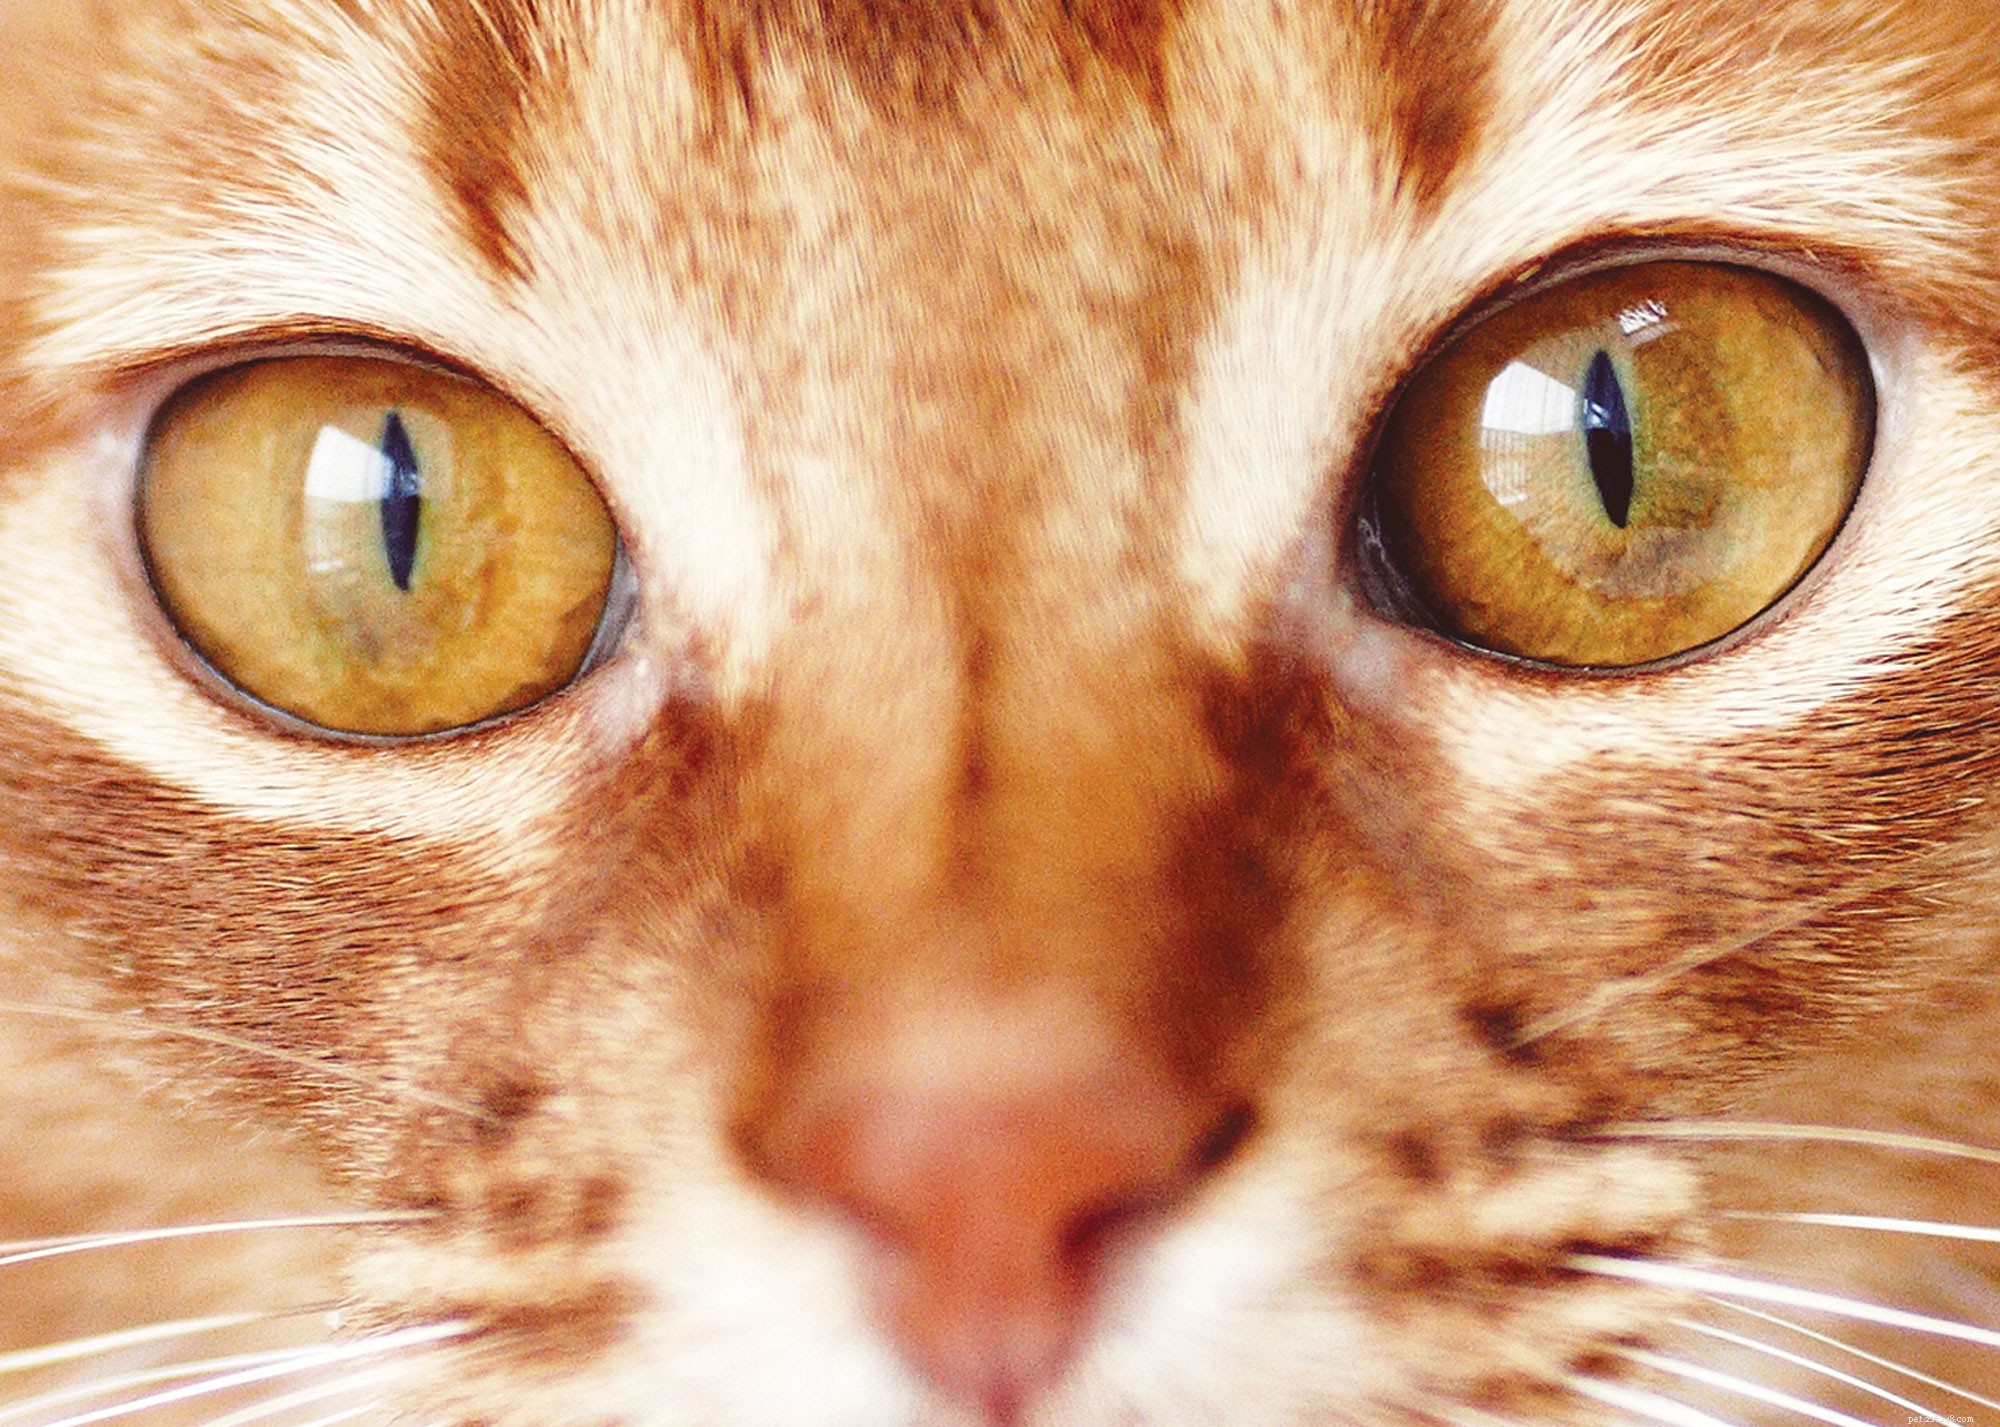 8 curiosidades sobre gatos para todos os amantes de gatos